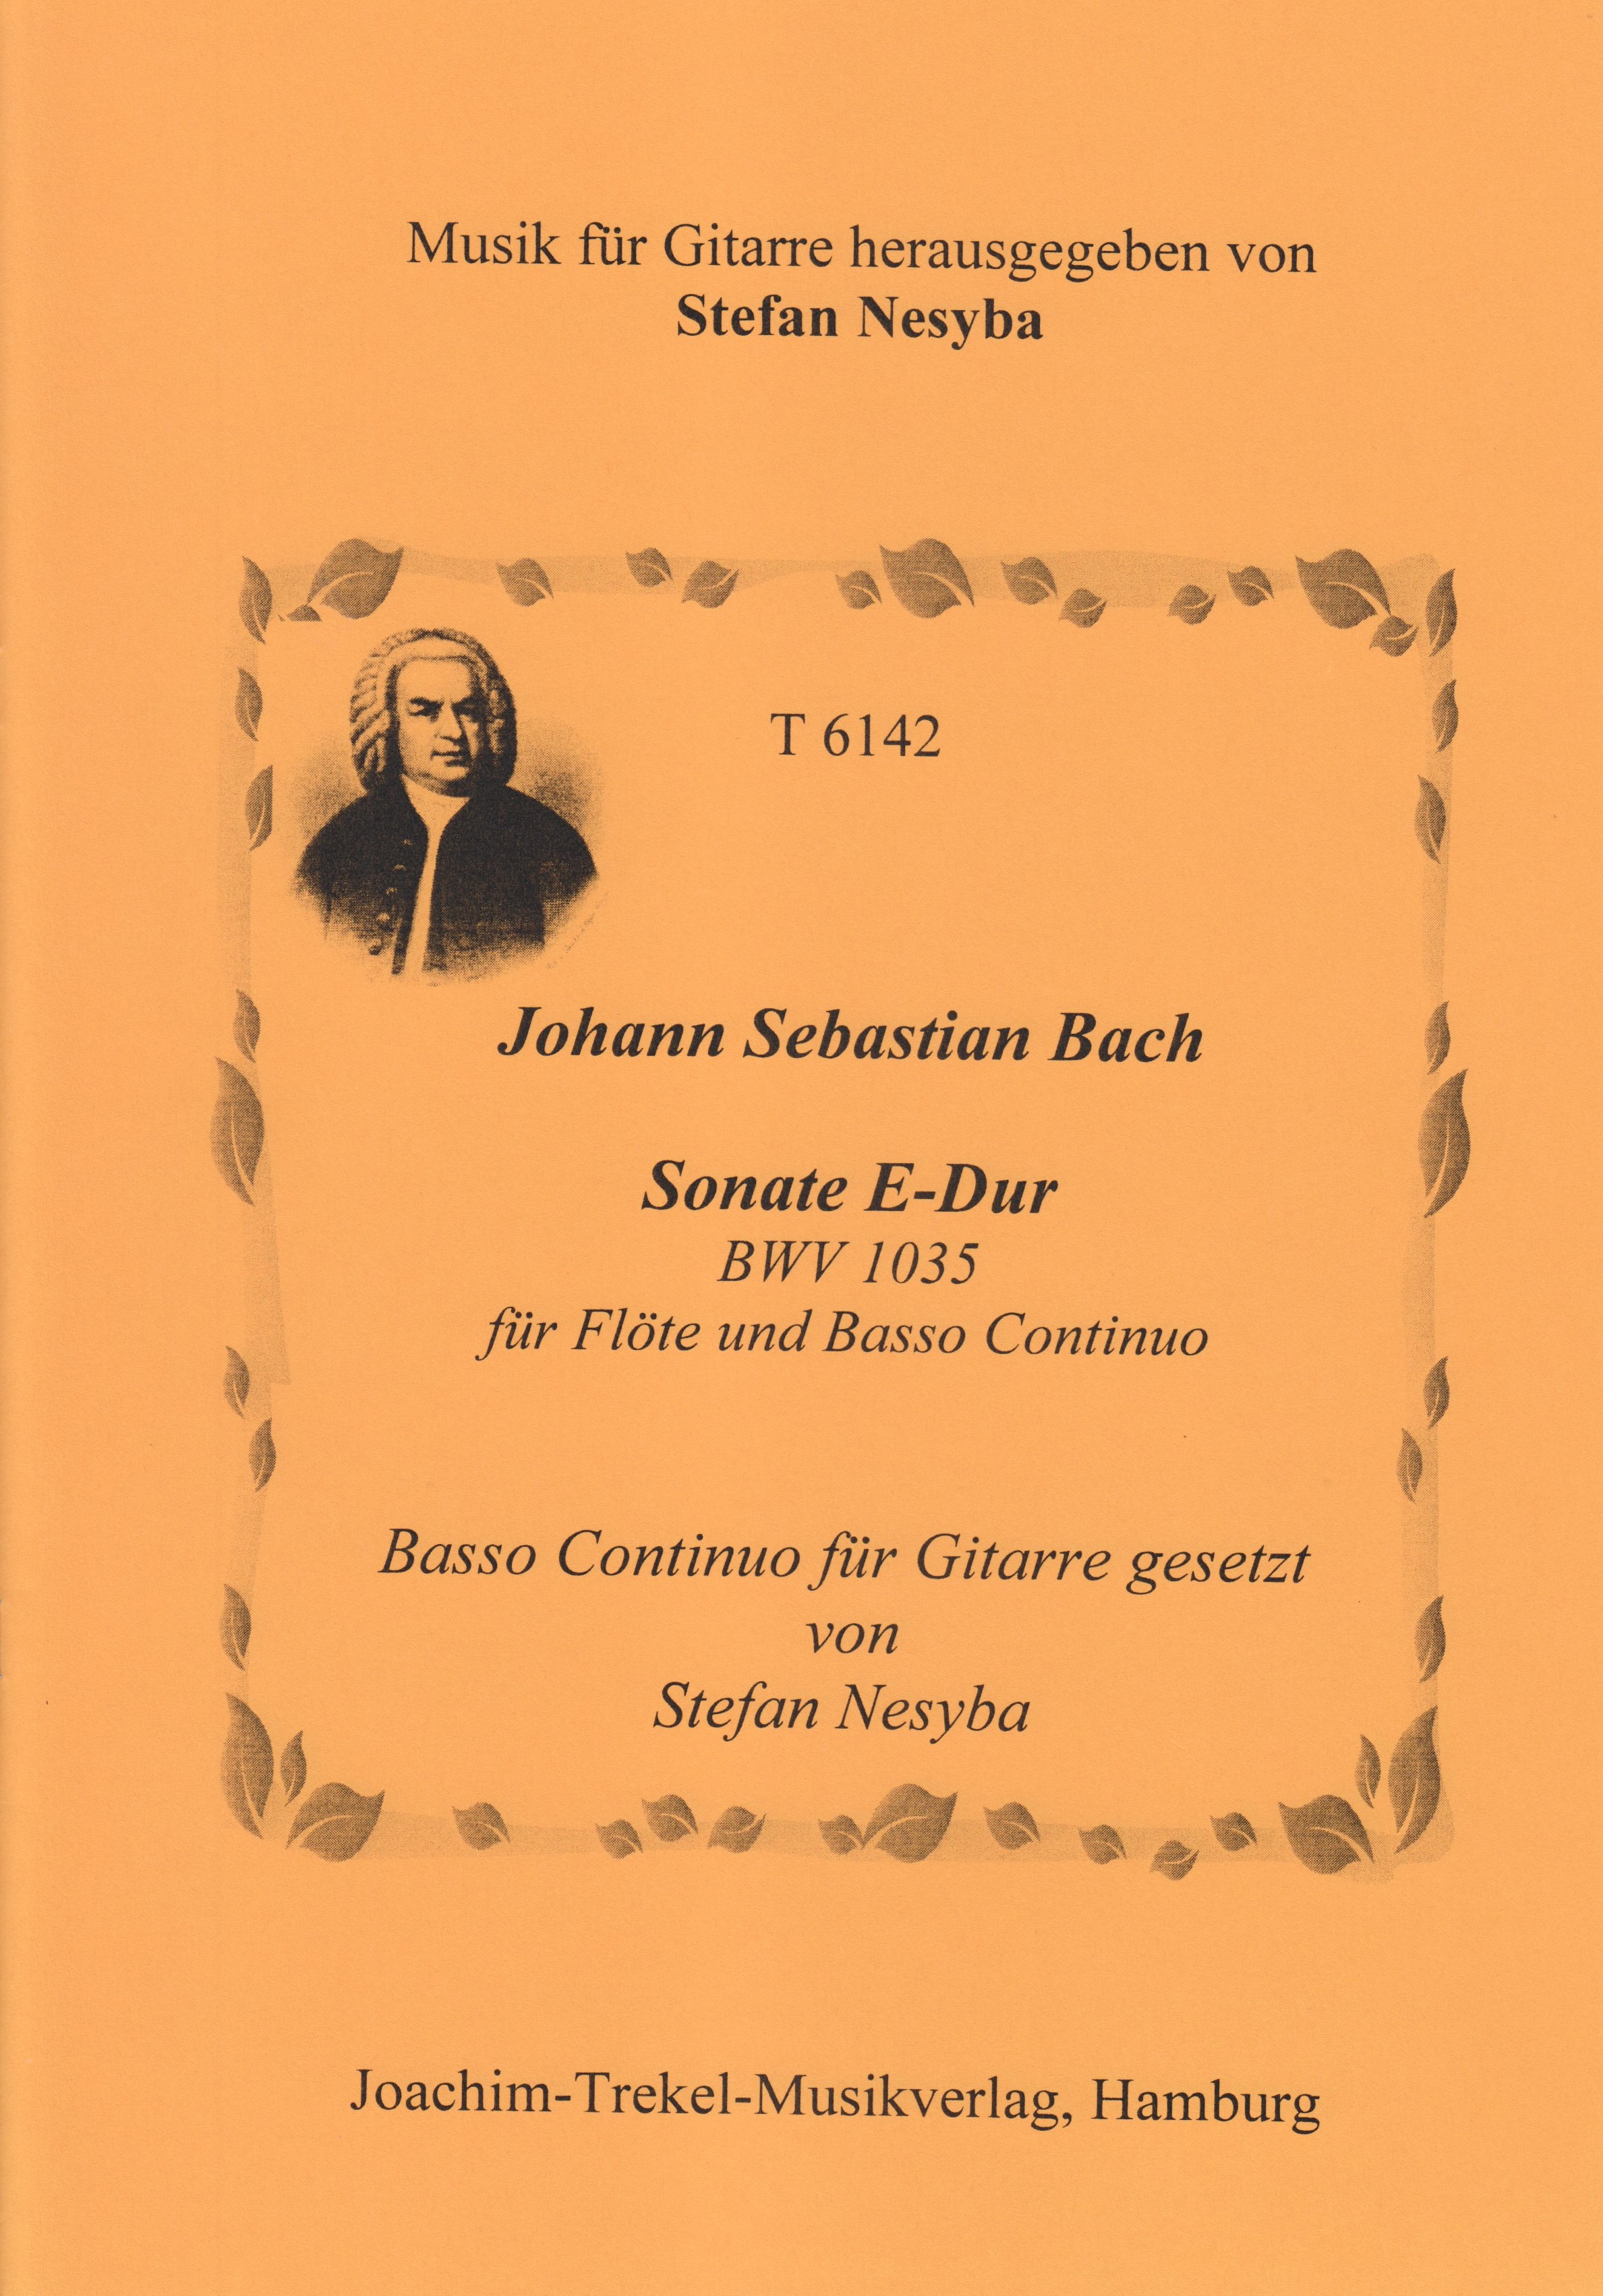 Sonate E-Dur BWV 1035